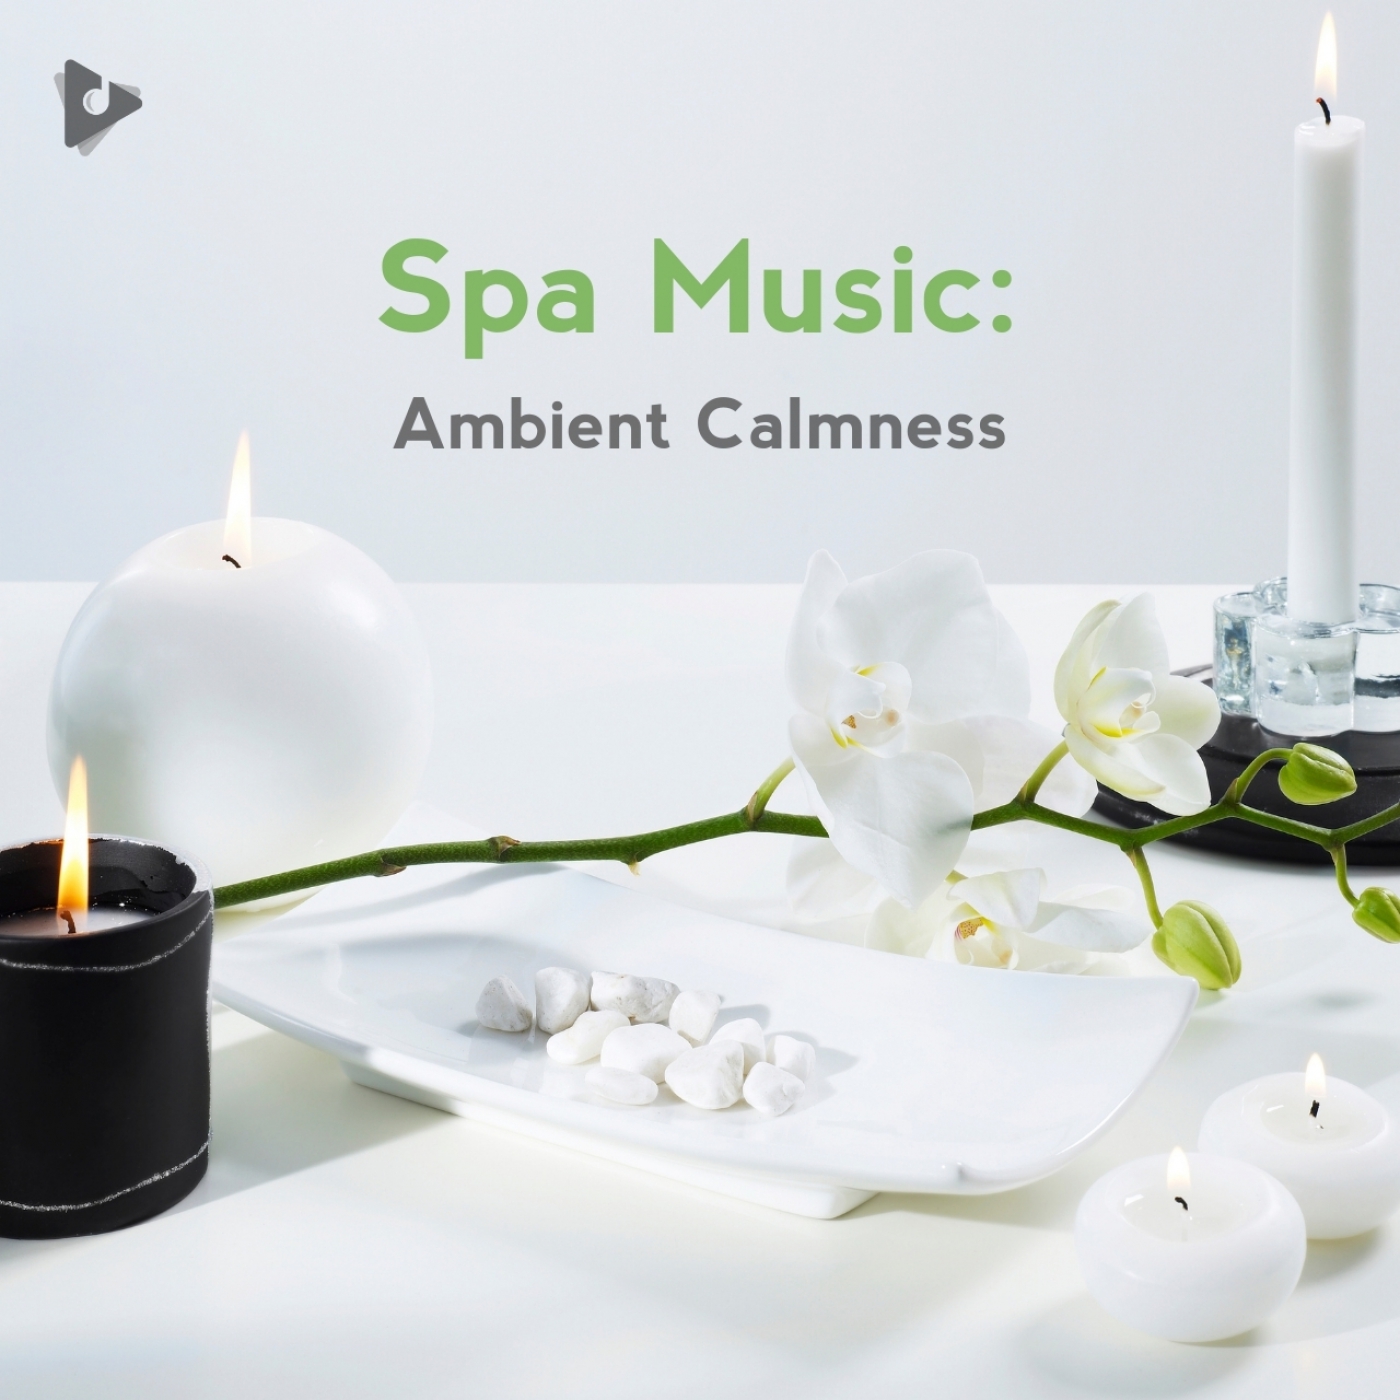 Spa Music: Ambient Calmness